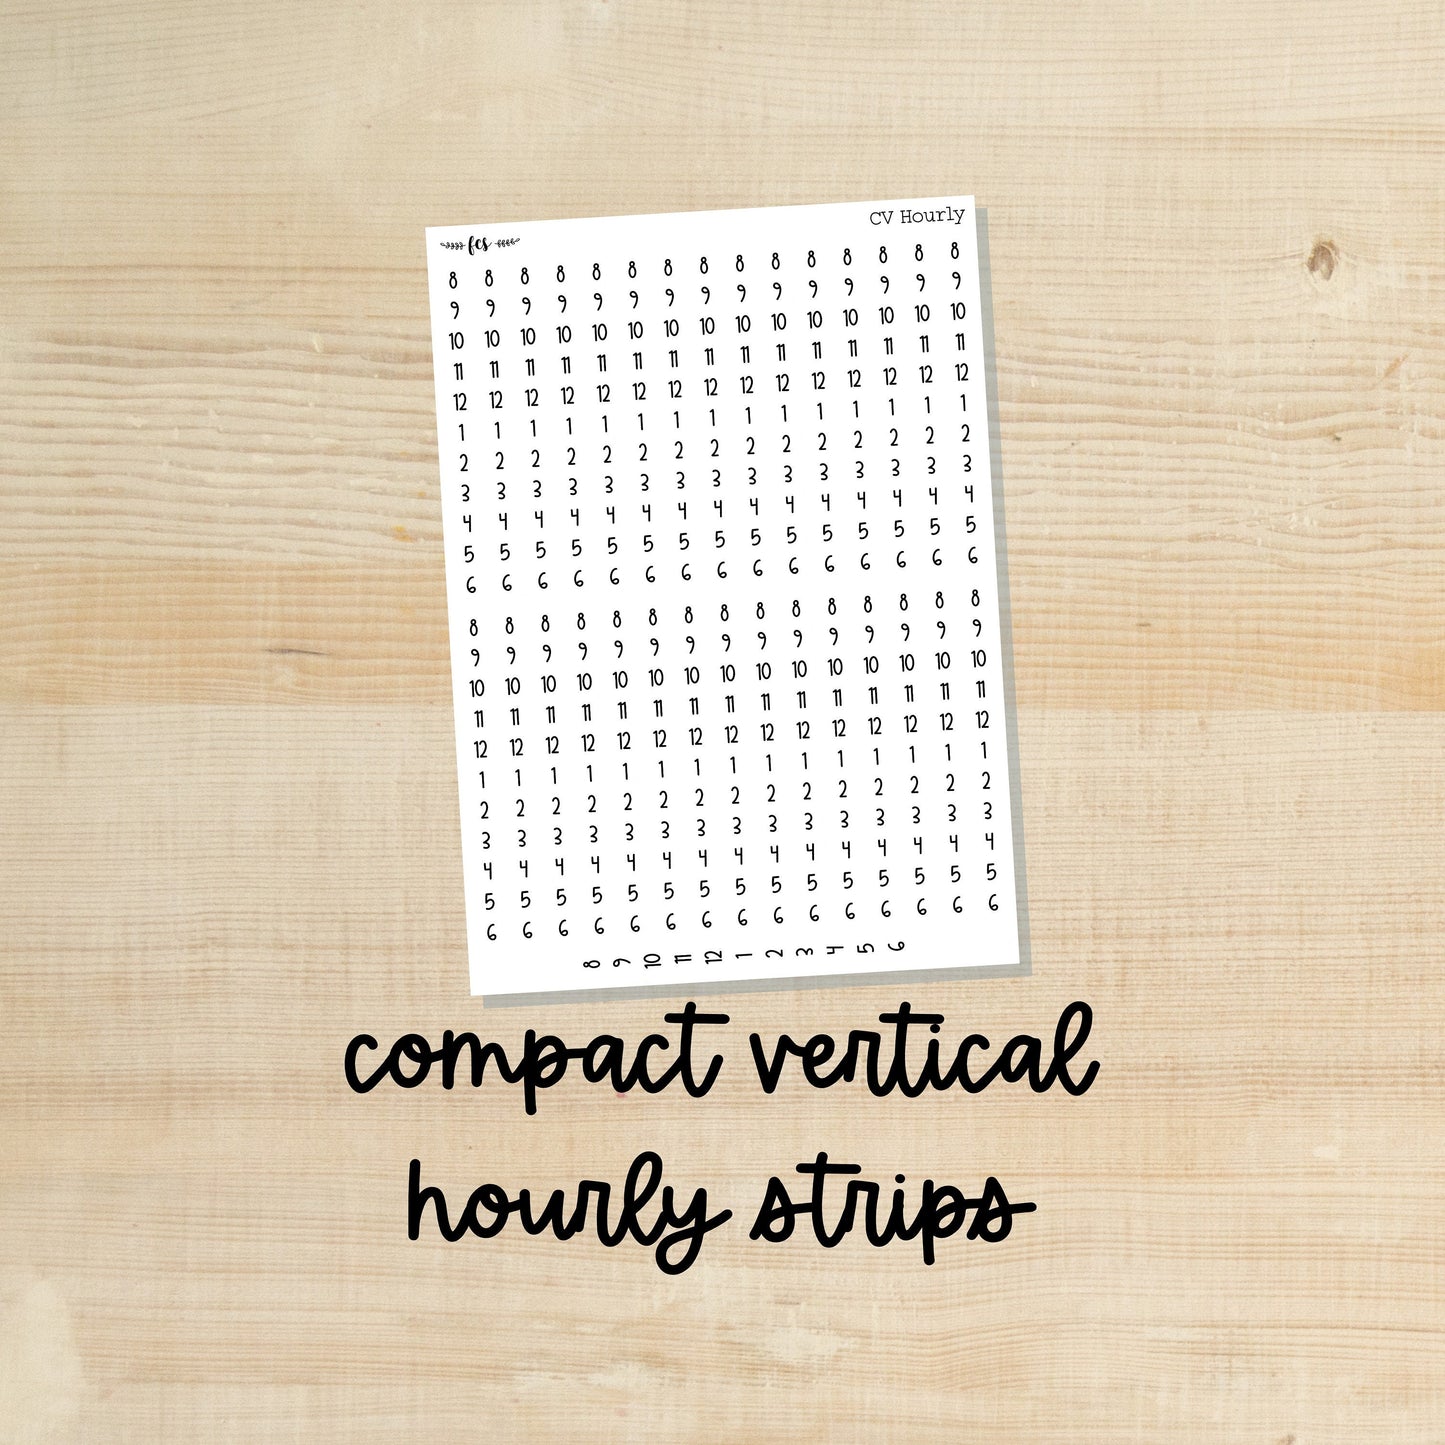 CV-HOURLY || Hourly stickers for Erin Condren Compact Vertical planner